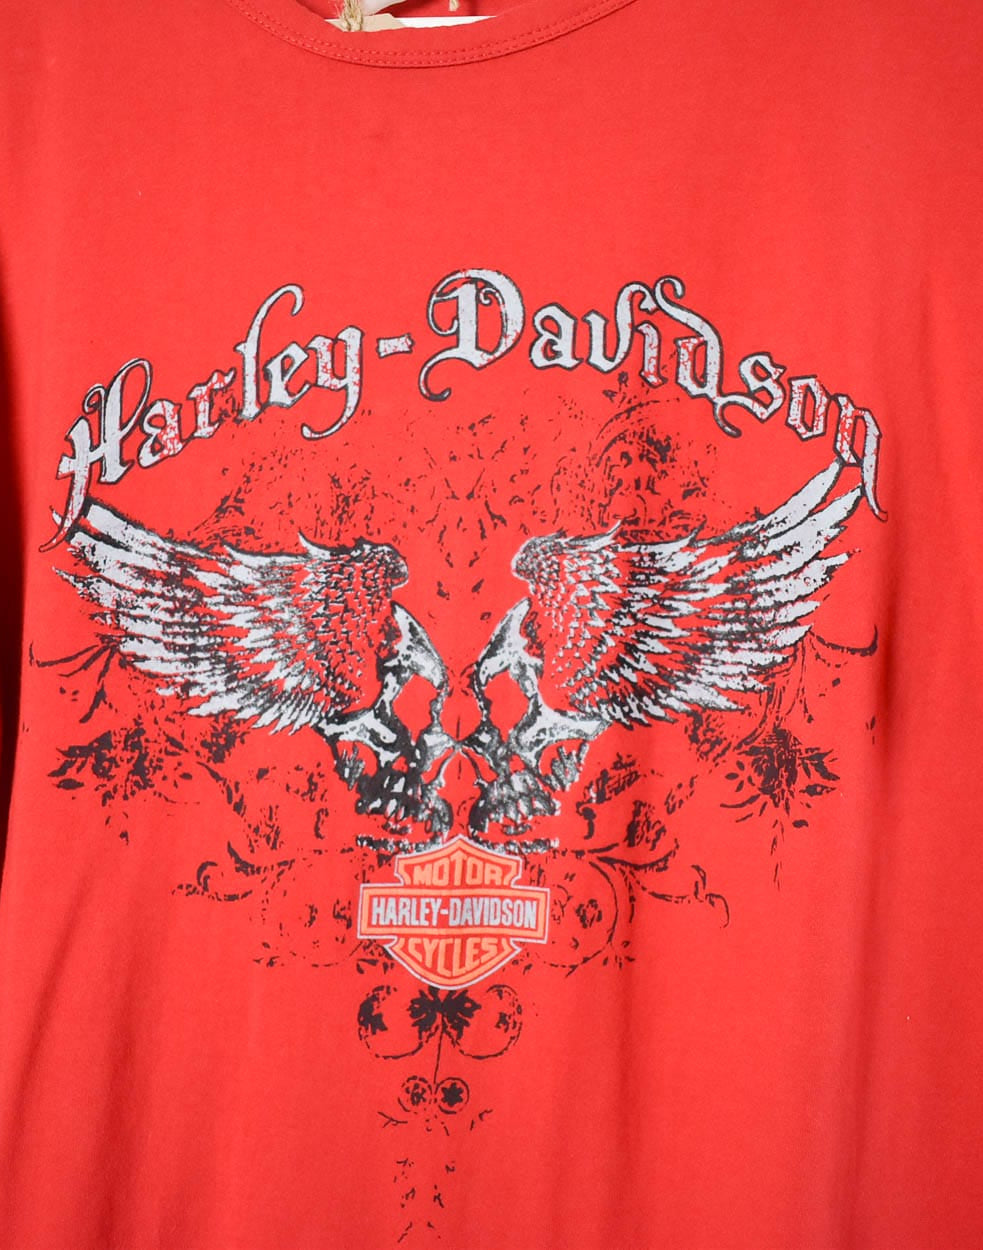 Red Harley-Davidson Graphic T-Shirt - Medium Women's